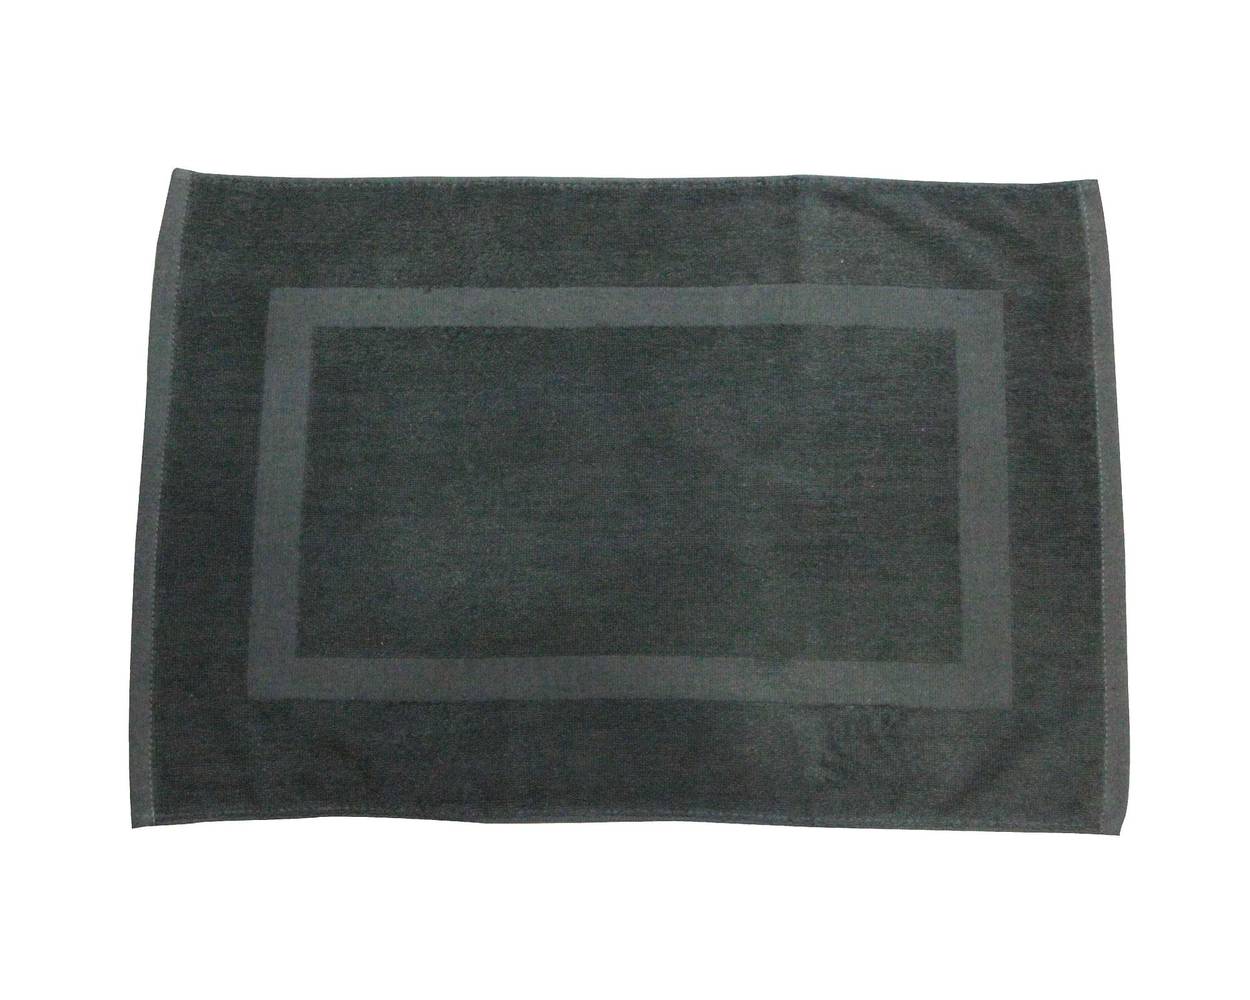 Cotidiana piso baño toalla gris (40 x 60 cm)